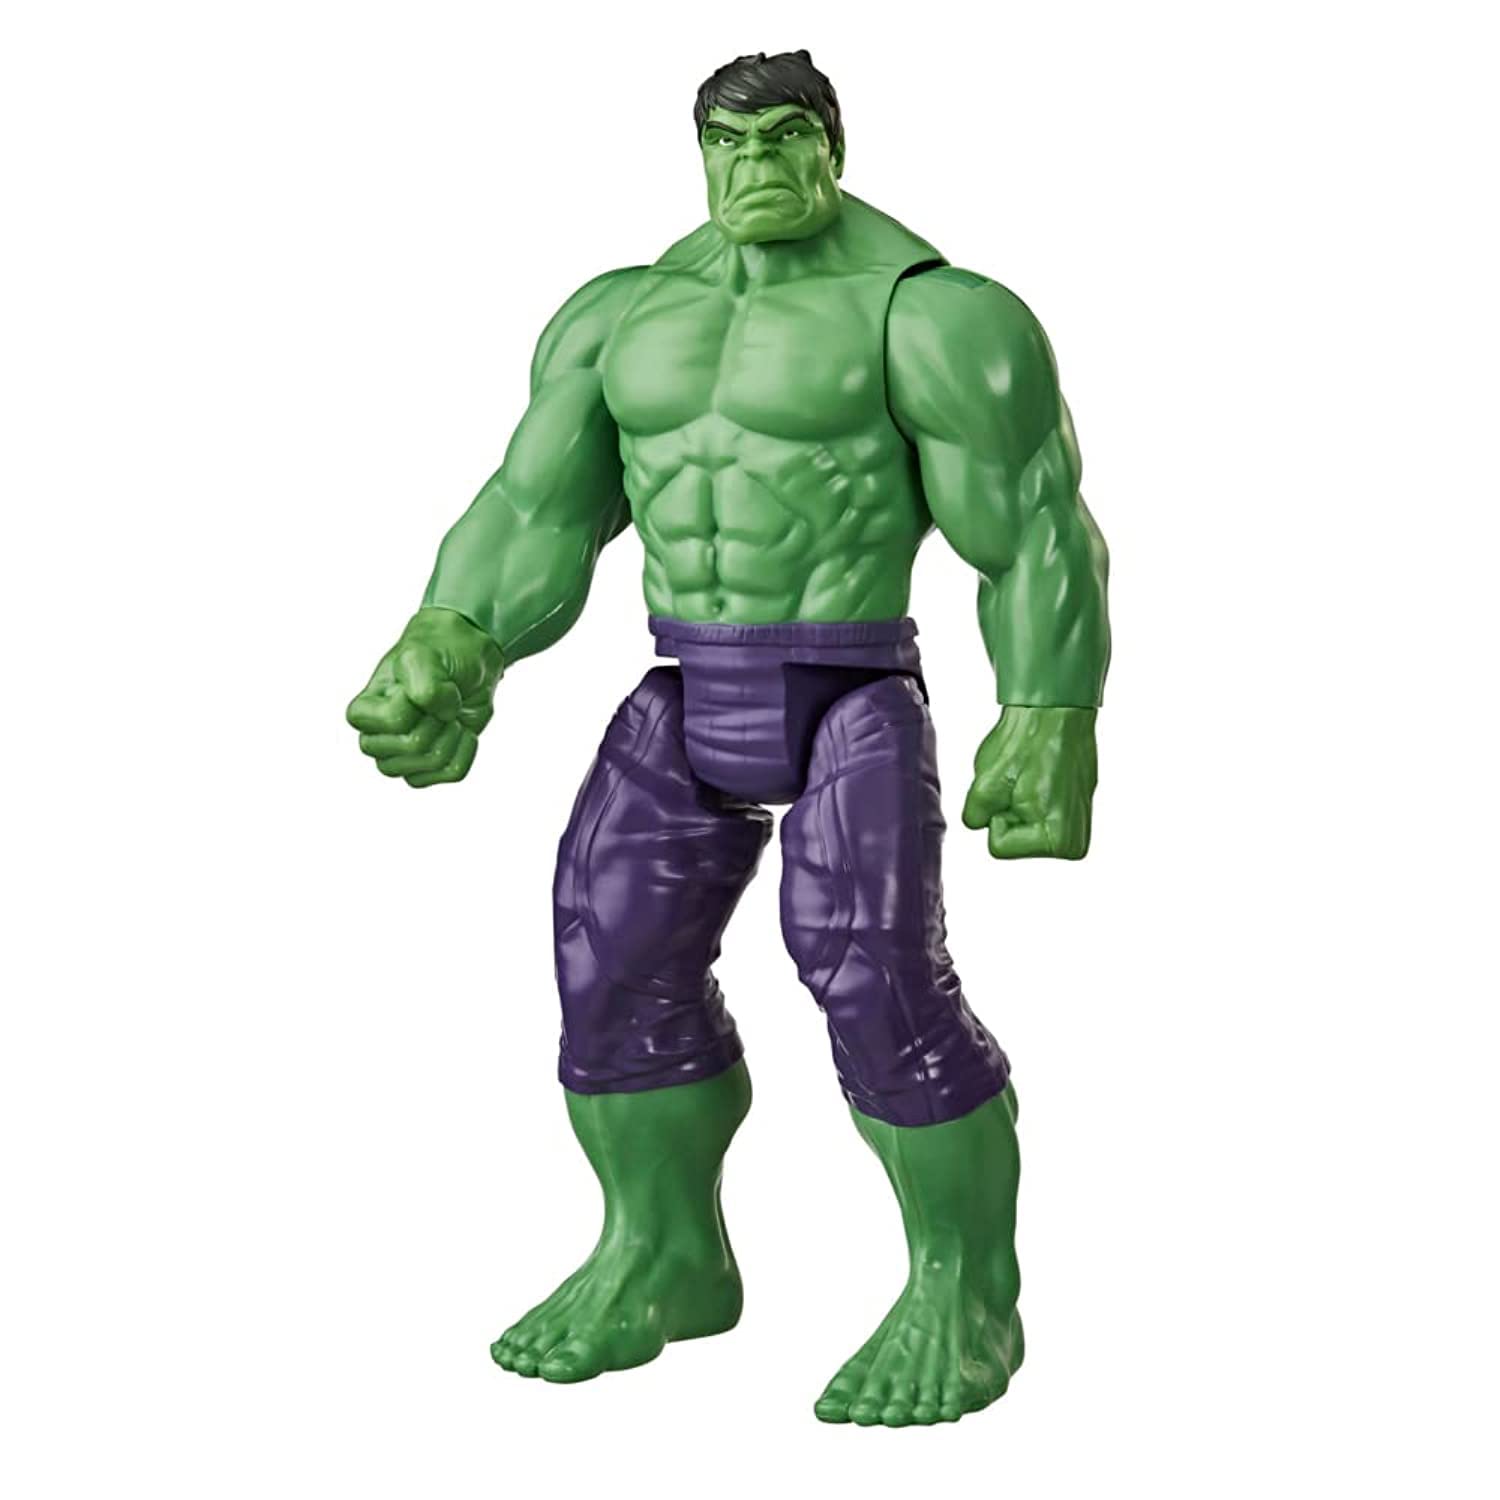 Avengers Marvel Titan Hero Series Blast Gear Deluxe Hulk Action Figure, 30-cm Toy, Inspired byMarvel Comics, for Children Aged 4 and Up,Green